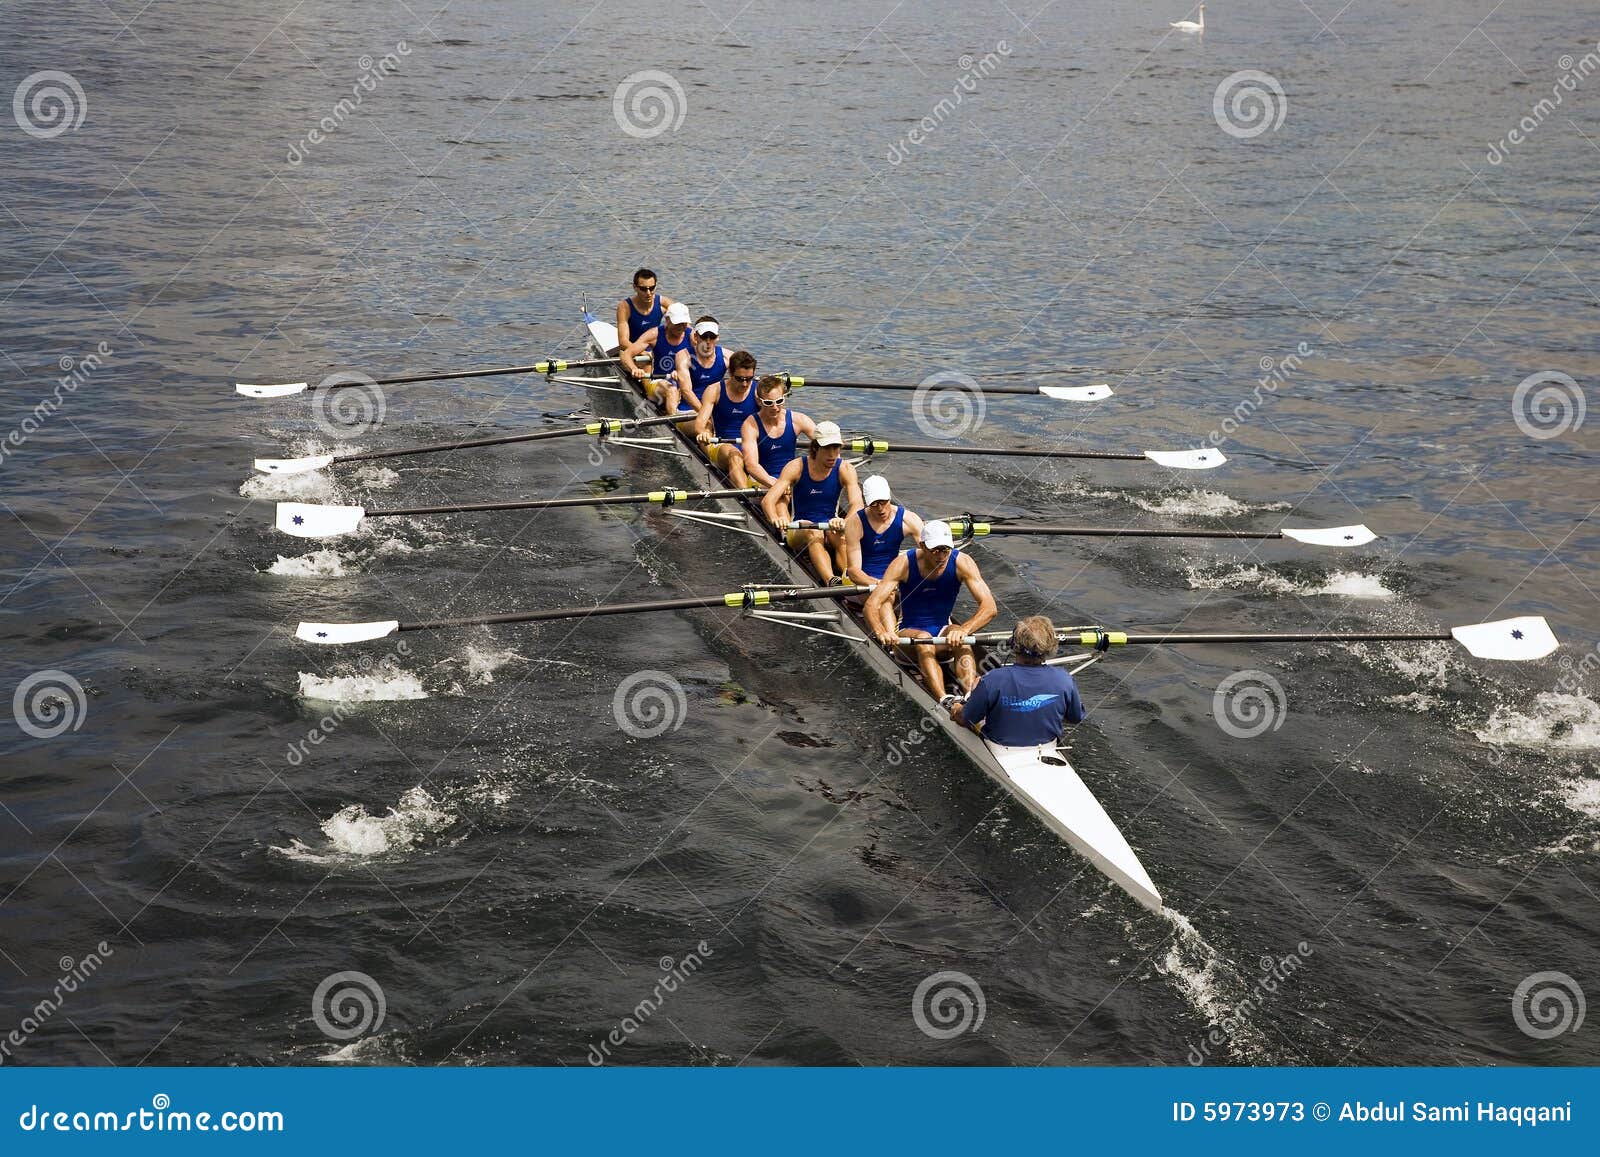 canoe racing editorial stock photo. image of rowers, leman